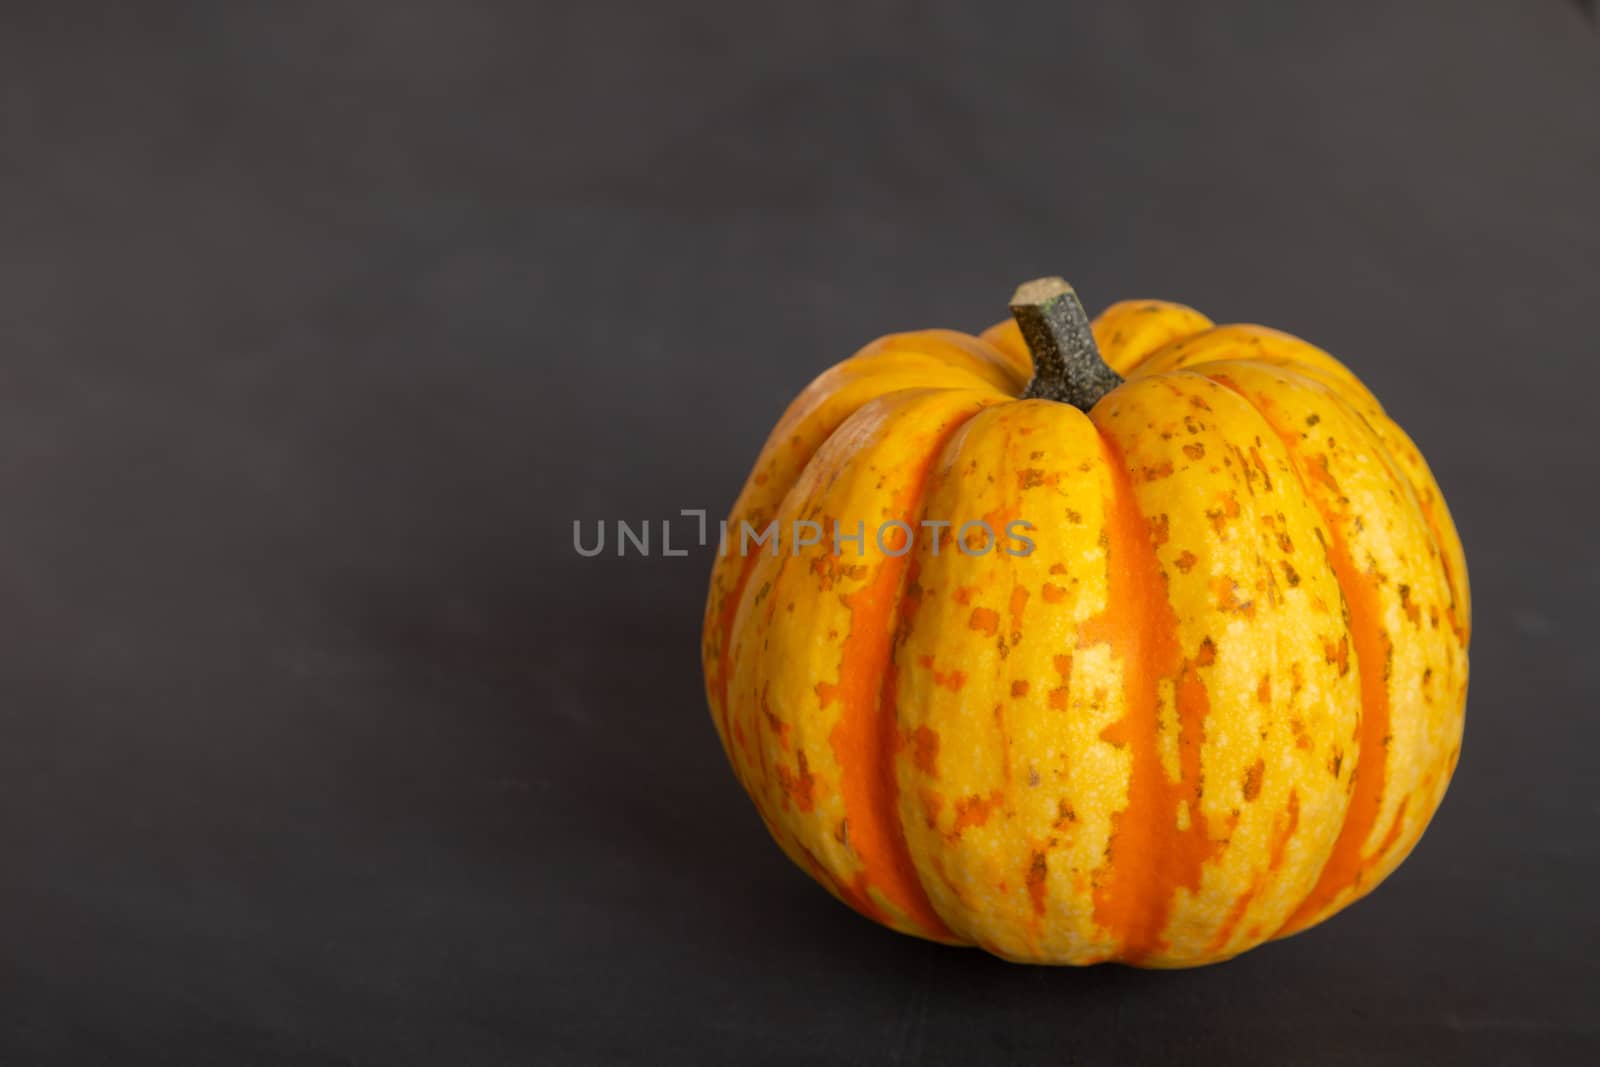 Orange, yellow pumpkin lies on a black background by 25ehaag6